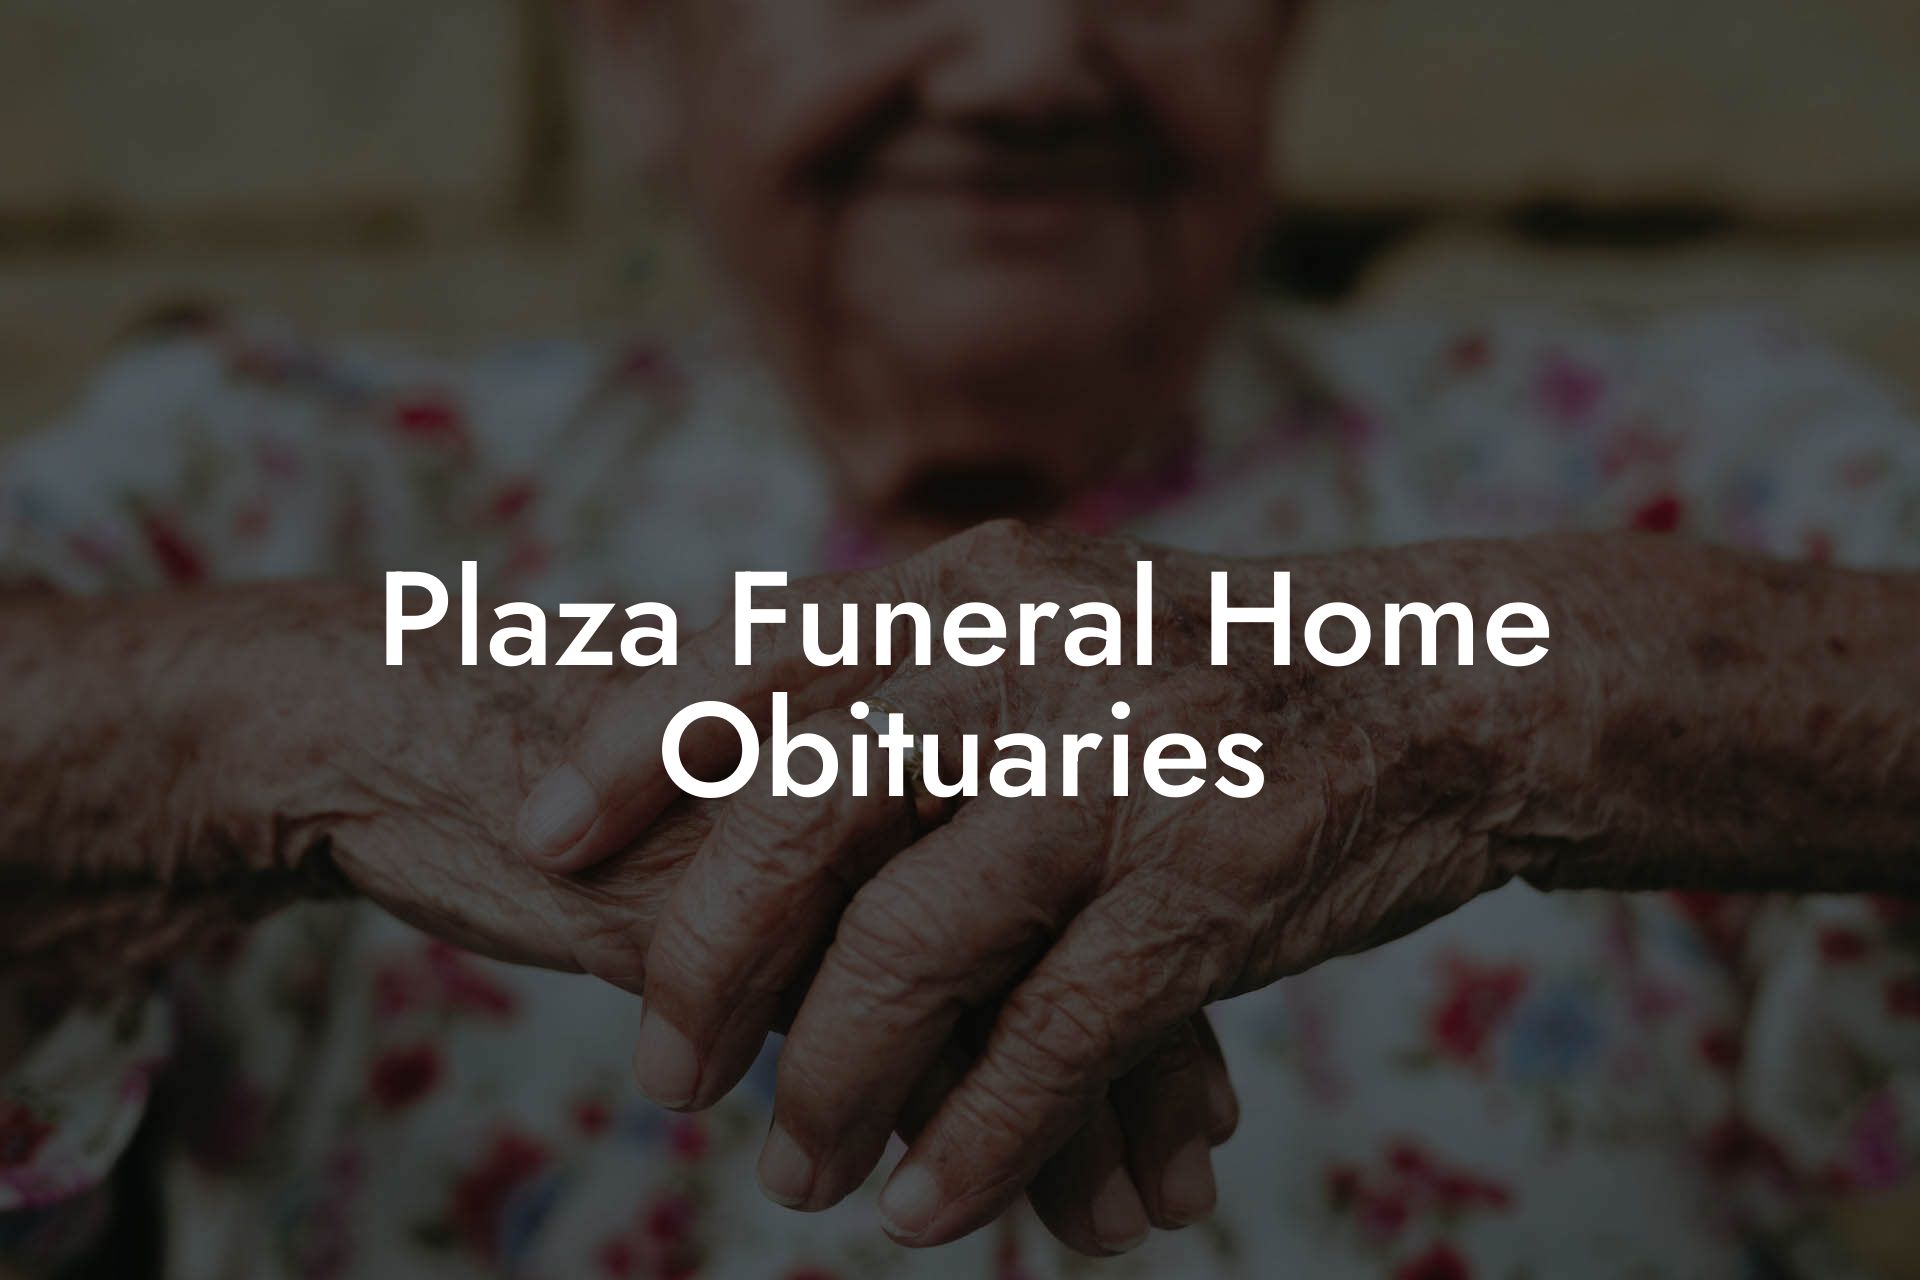 Plaza Funeral Home Obituaries